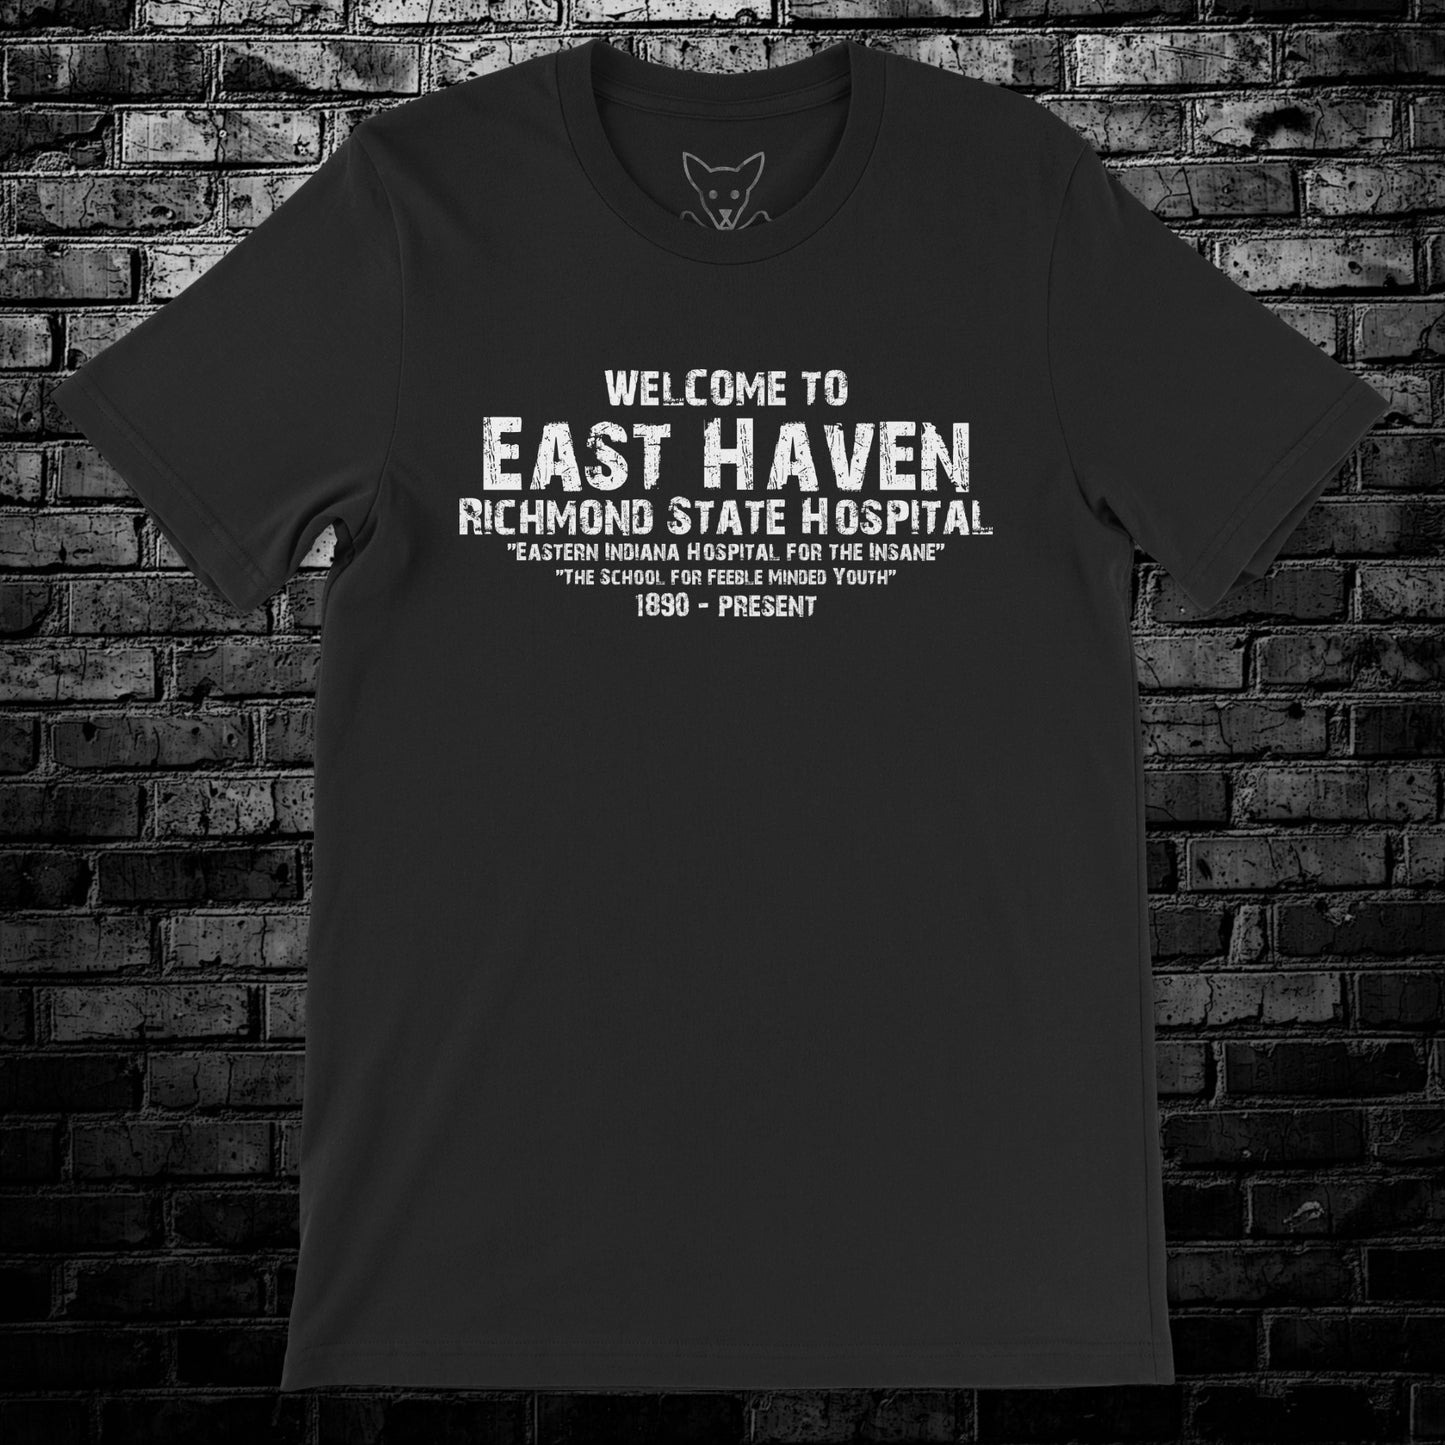 East Haven Tee